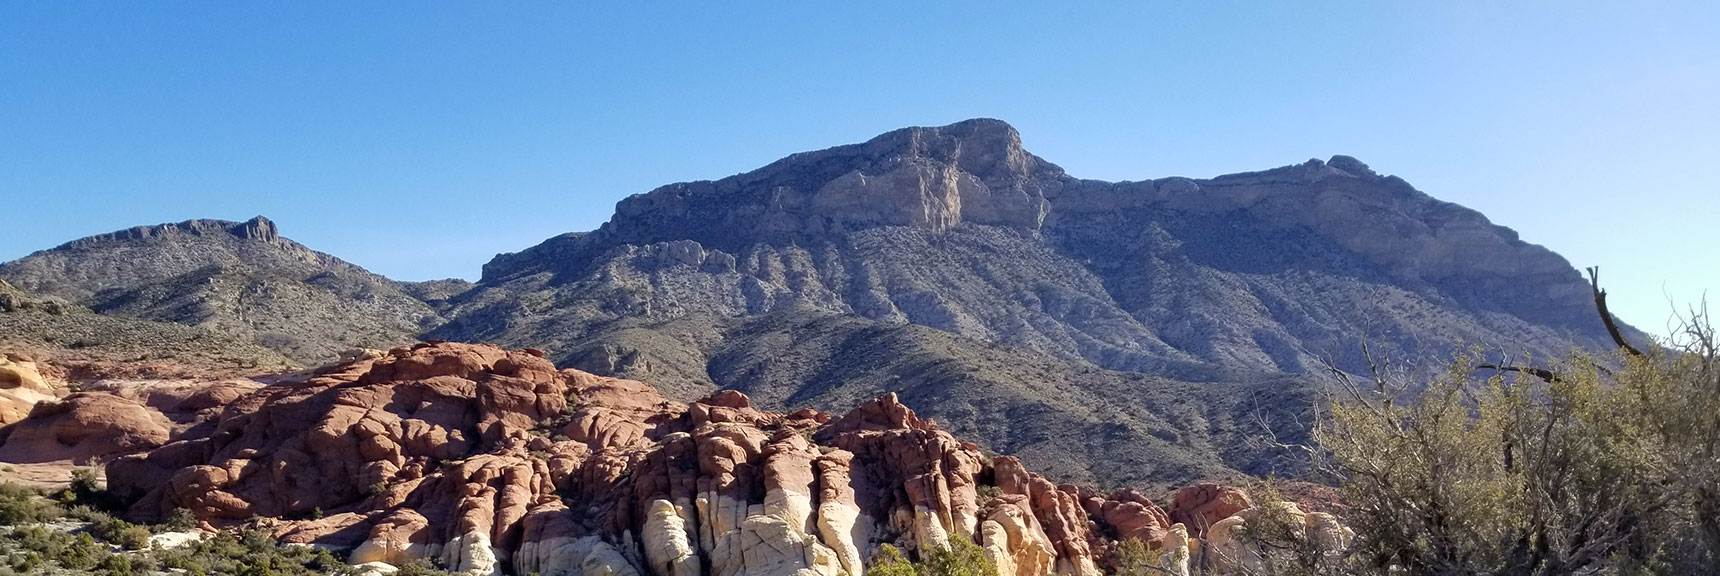 Damsel Peak Viewed from Calico Basin, Nevada